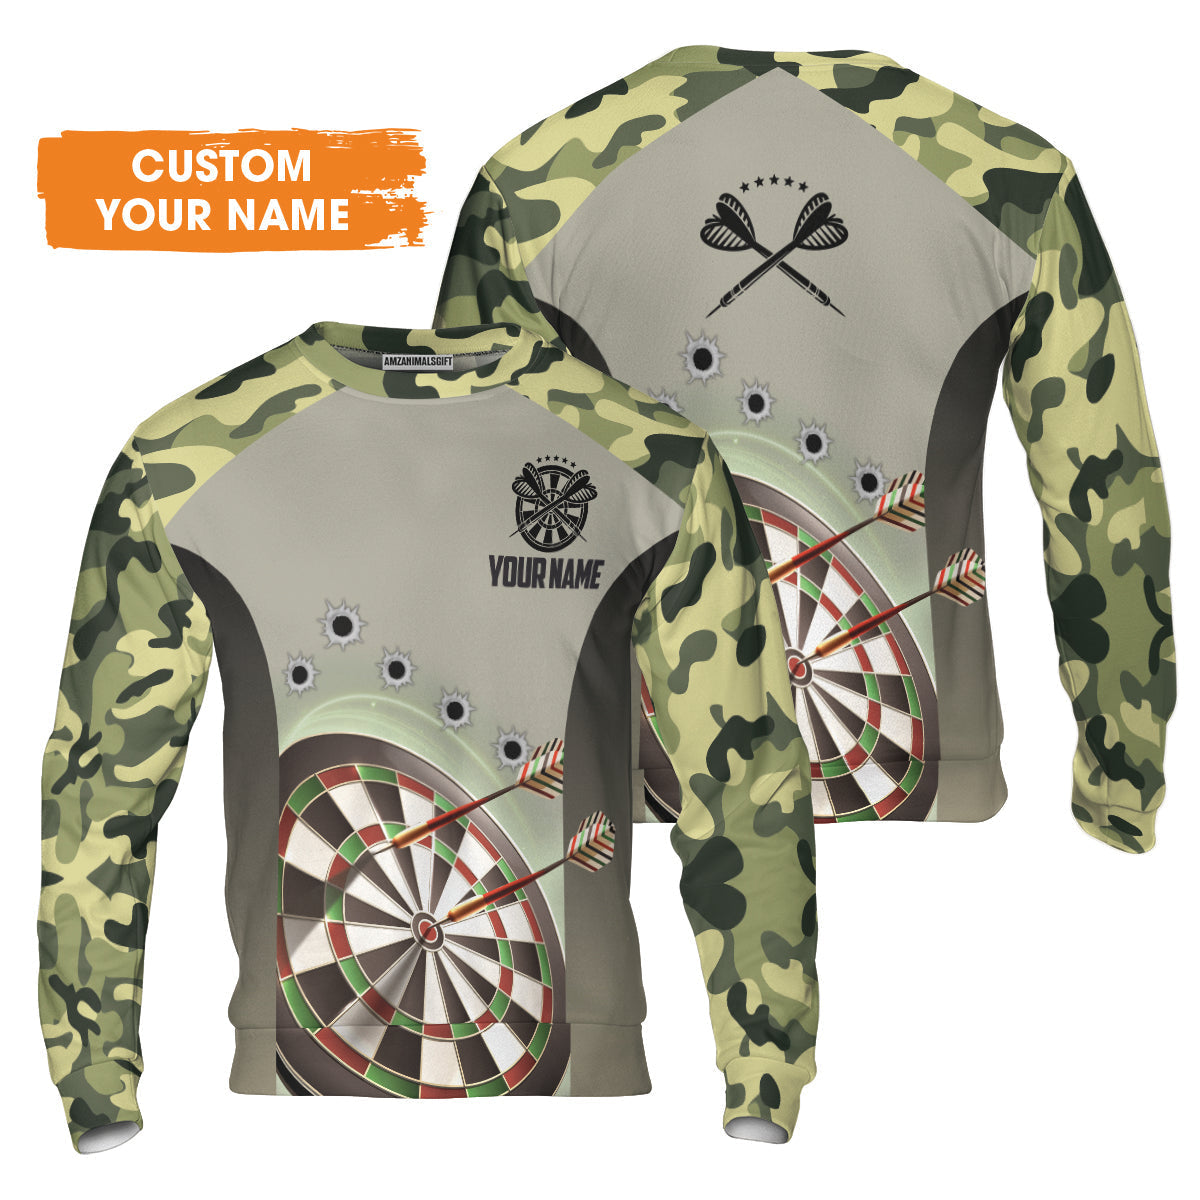 Customized Name Darts Sweatshirt, Camo Pattern Personalized Darts Sweatshirt - Perfect Gift For Darts Lovers